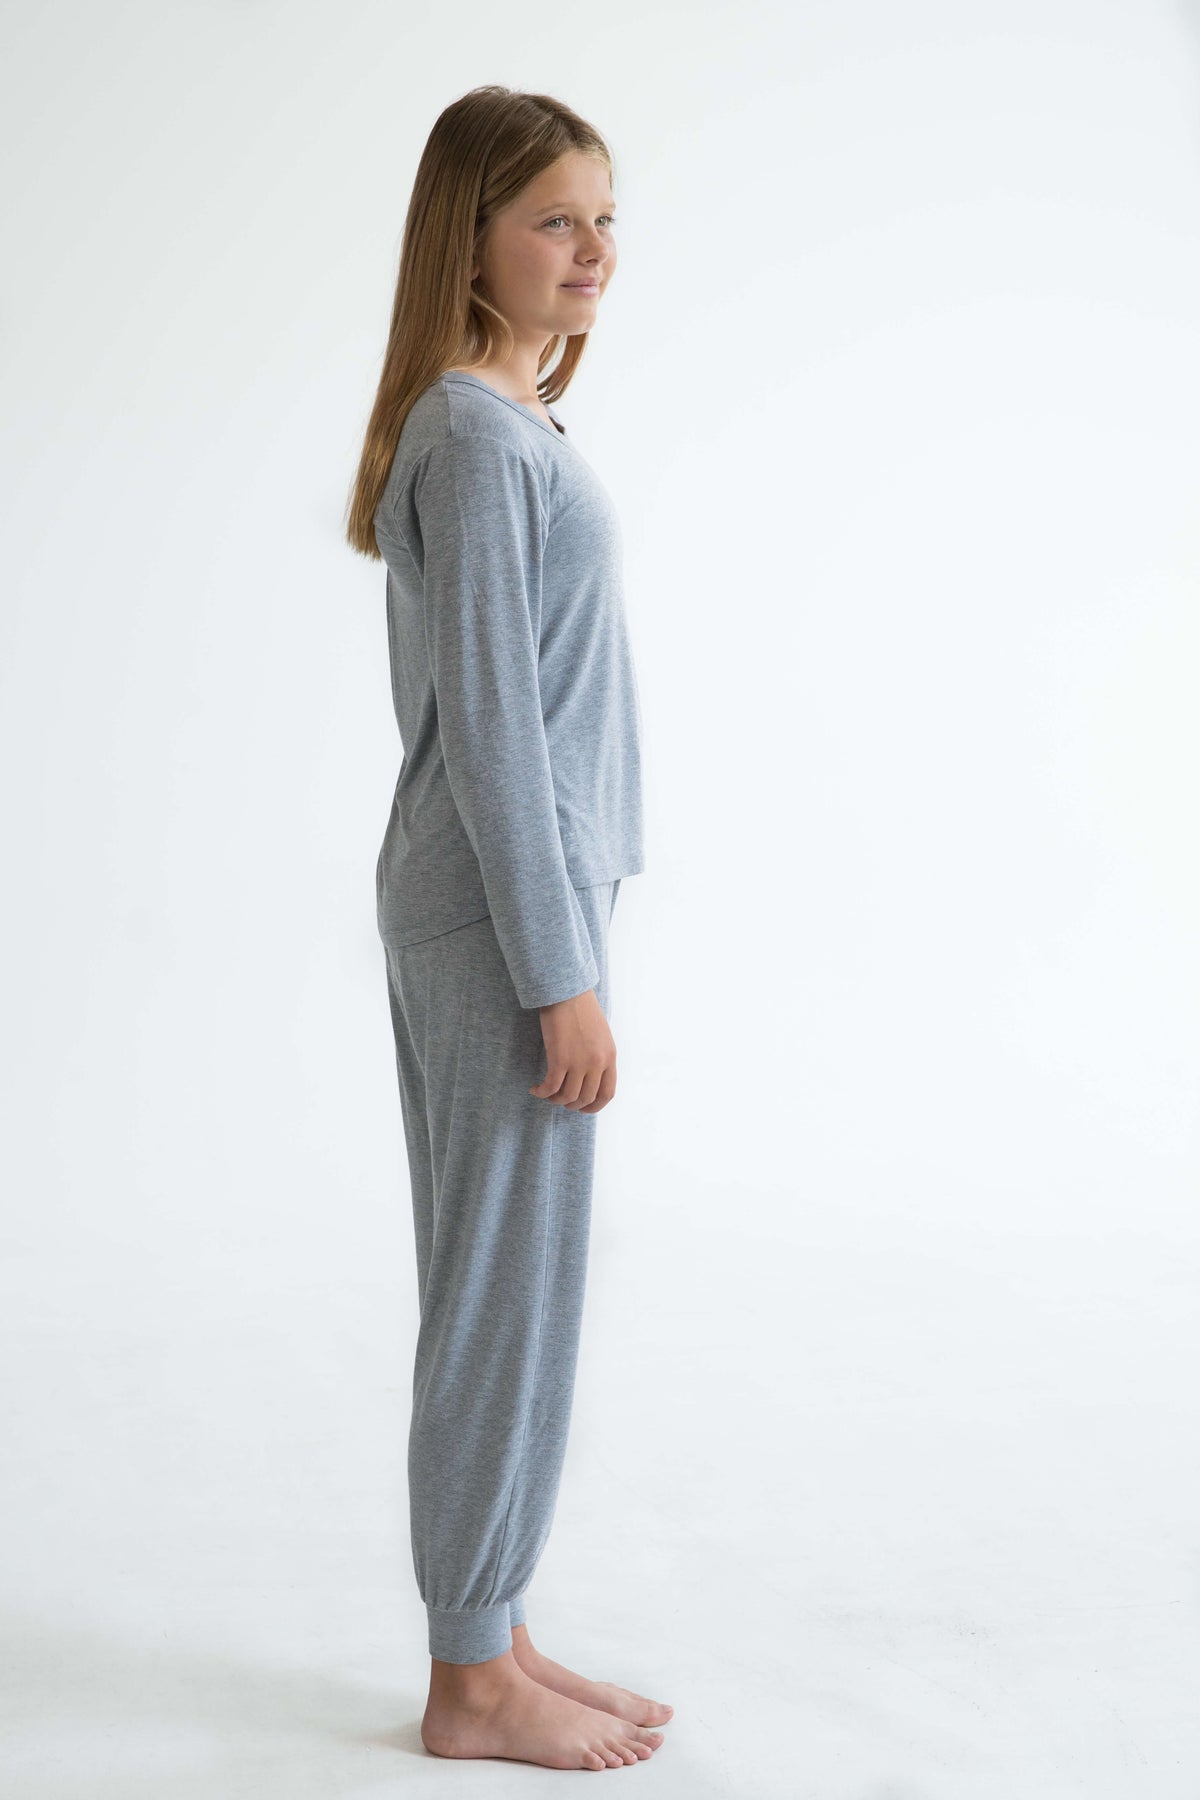 grey teen girls winter long sleeve bamboo pyjama top by Love Haidee Australia side